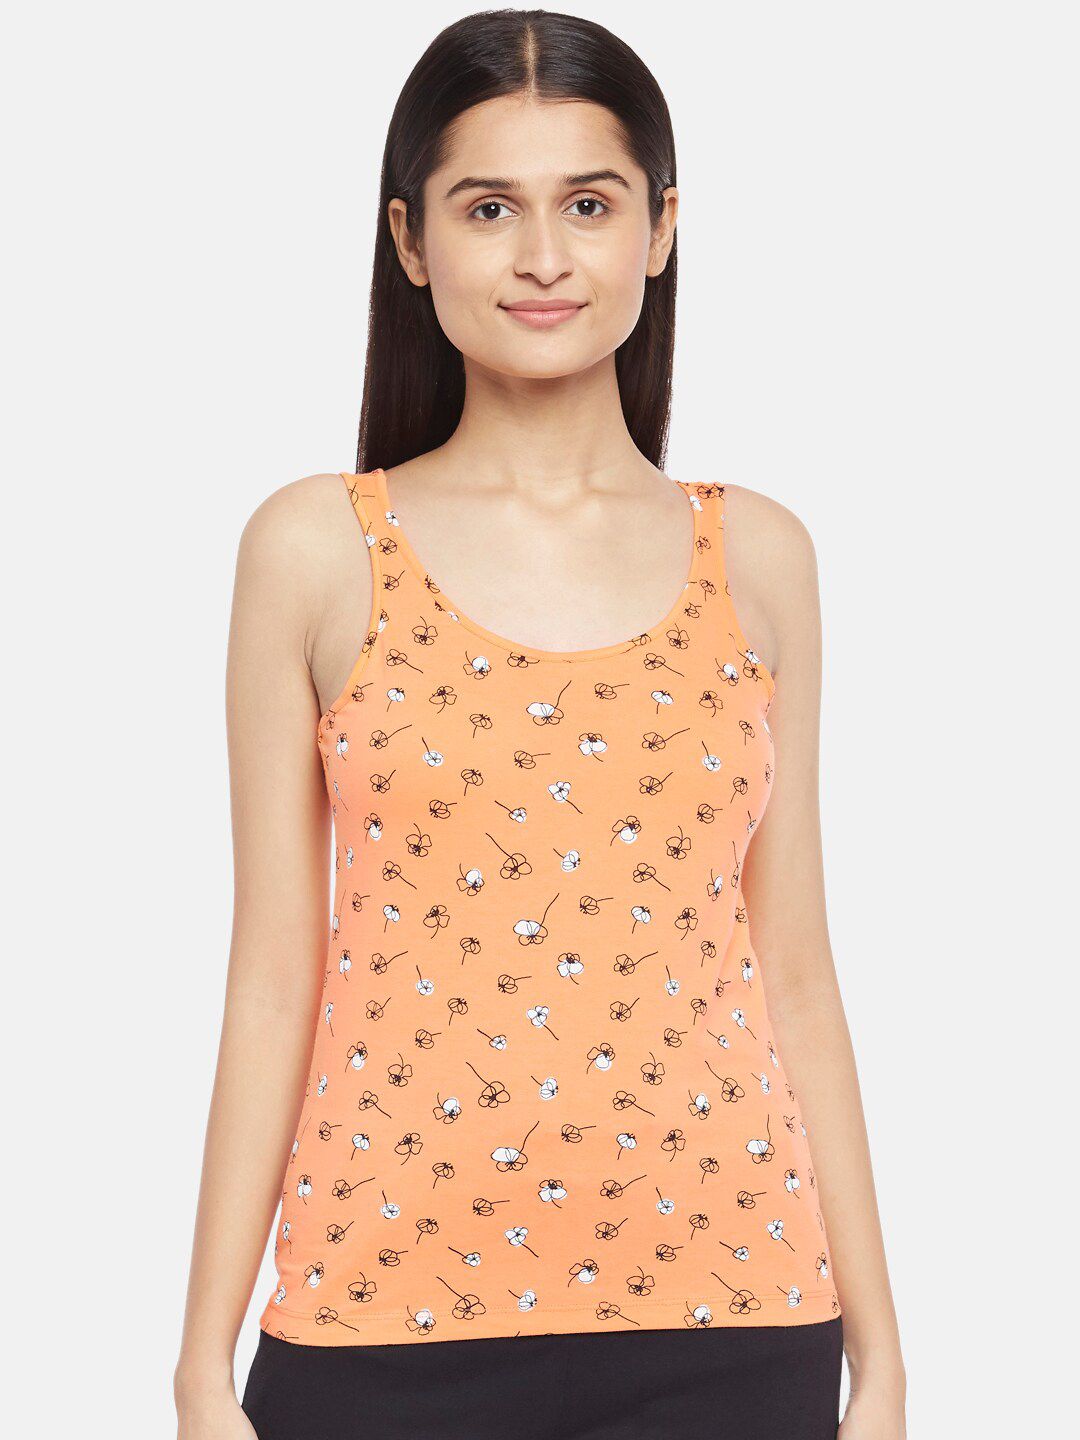 Dreamz by Pantaloons Women Orange Floral Printed Lounge Tshirt Price in India